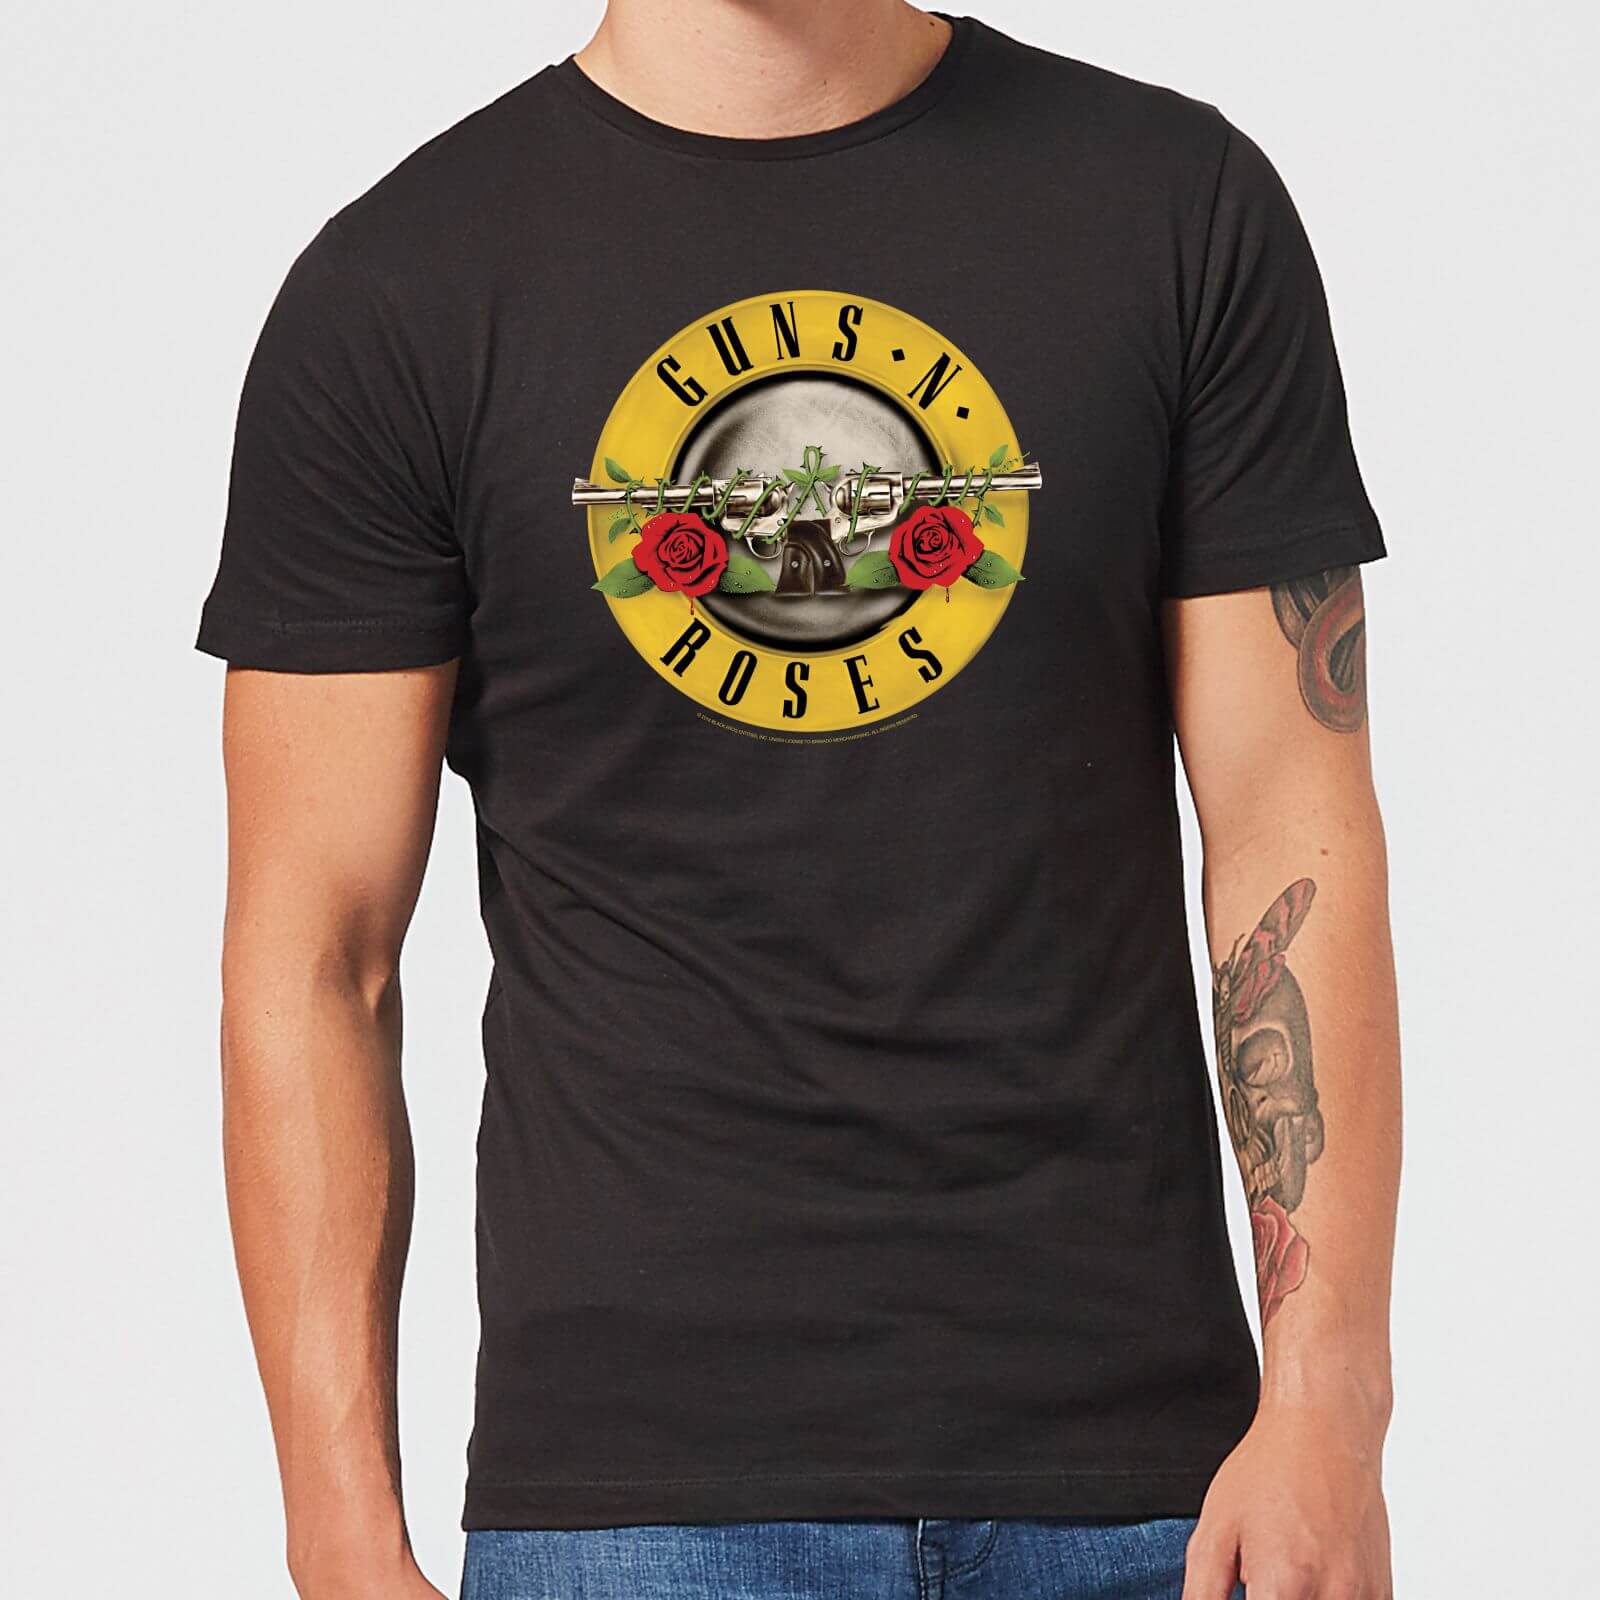 Guns N Roses Bullet Men's T-Shirt - Black - XS